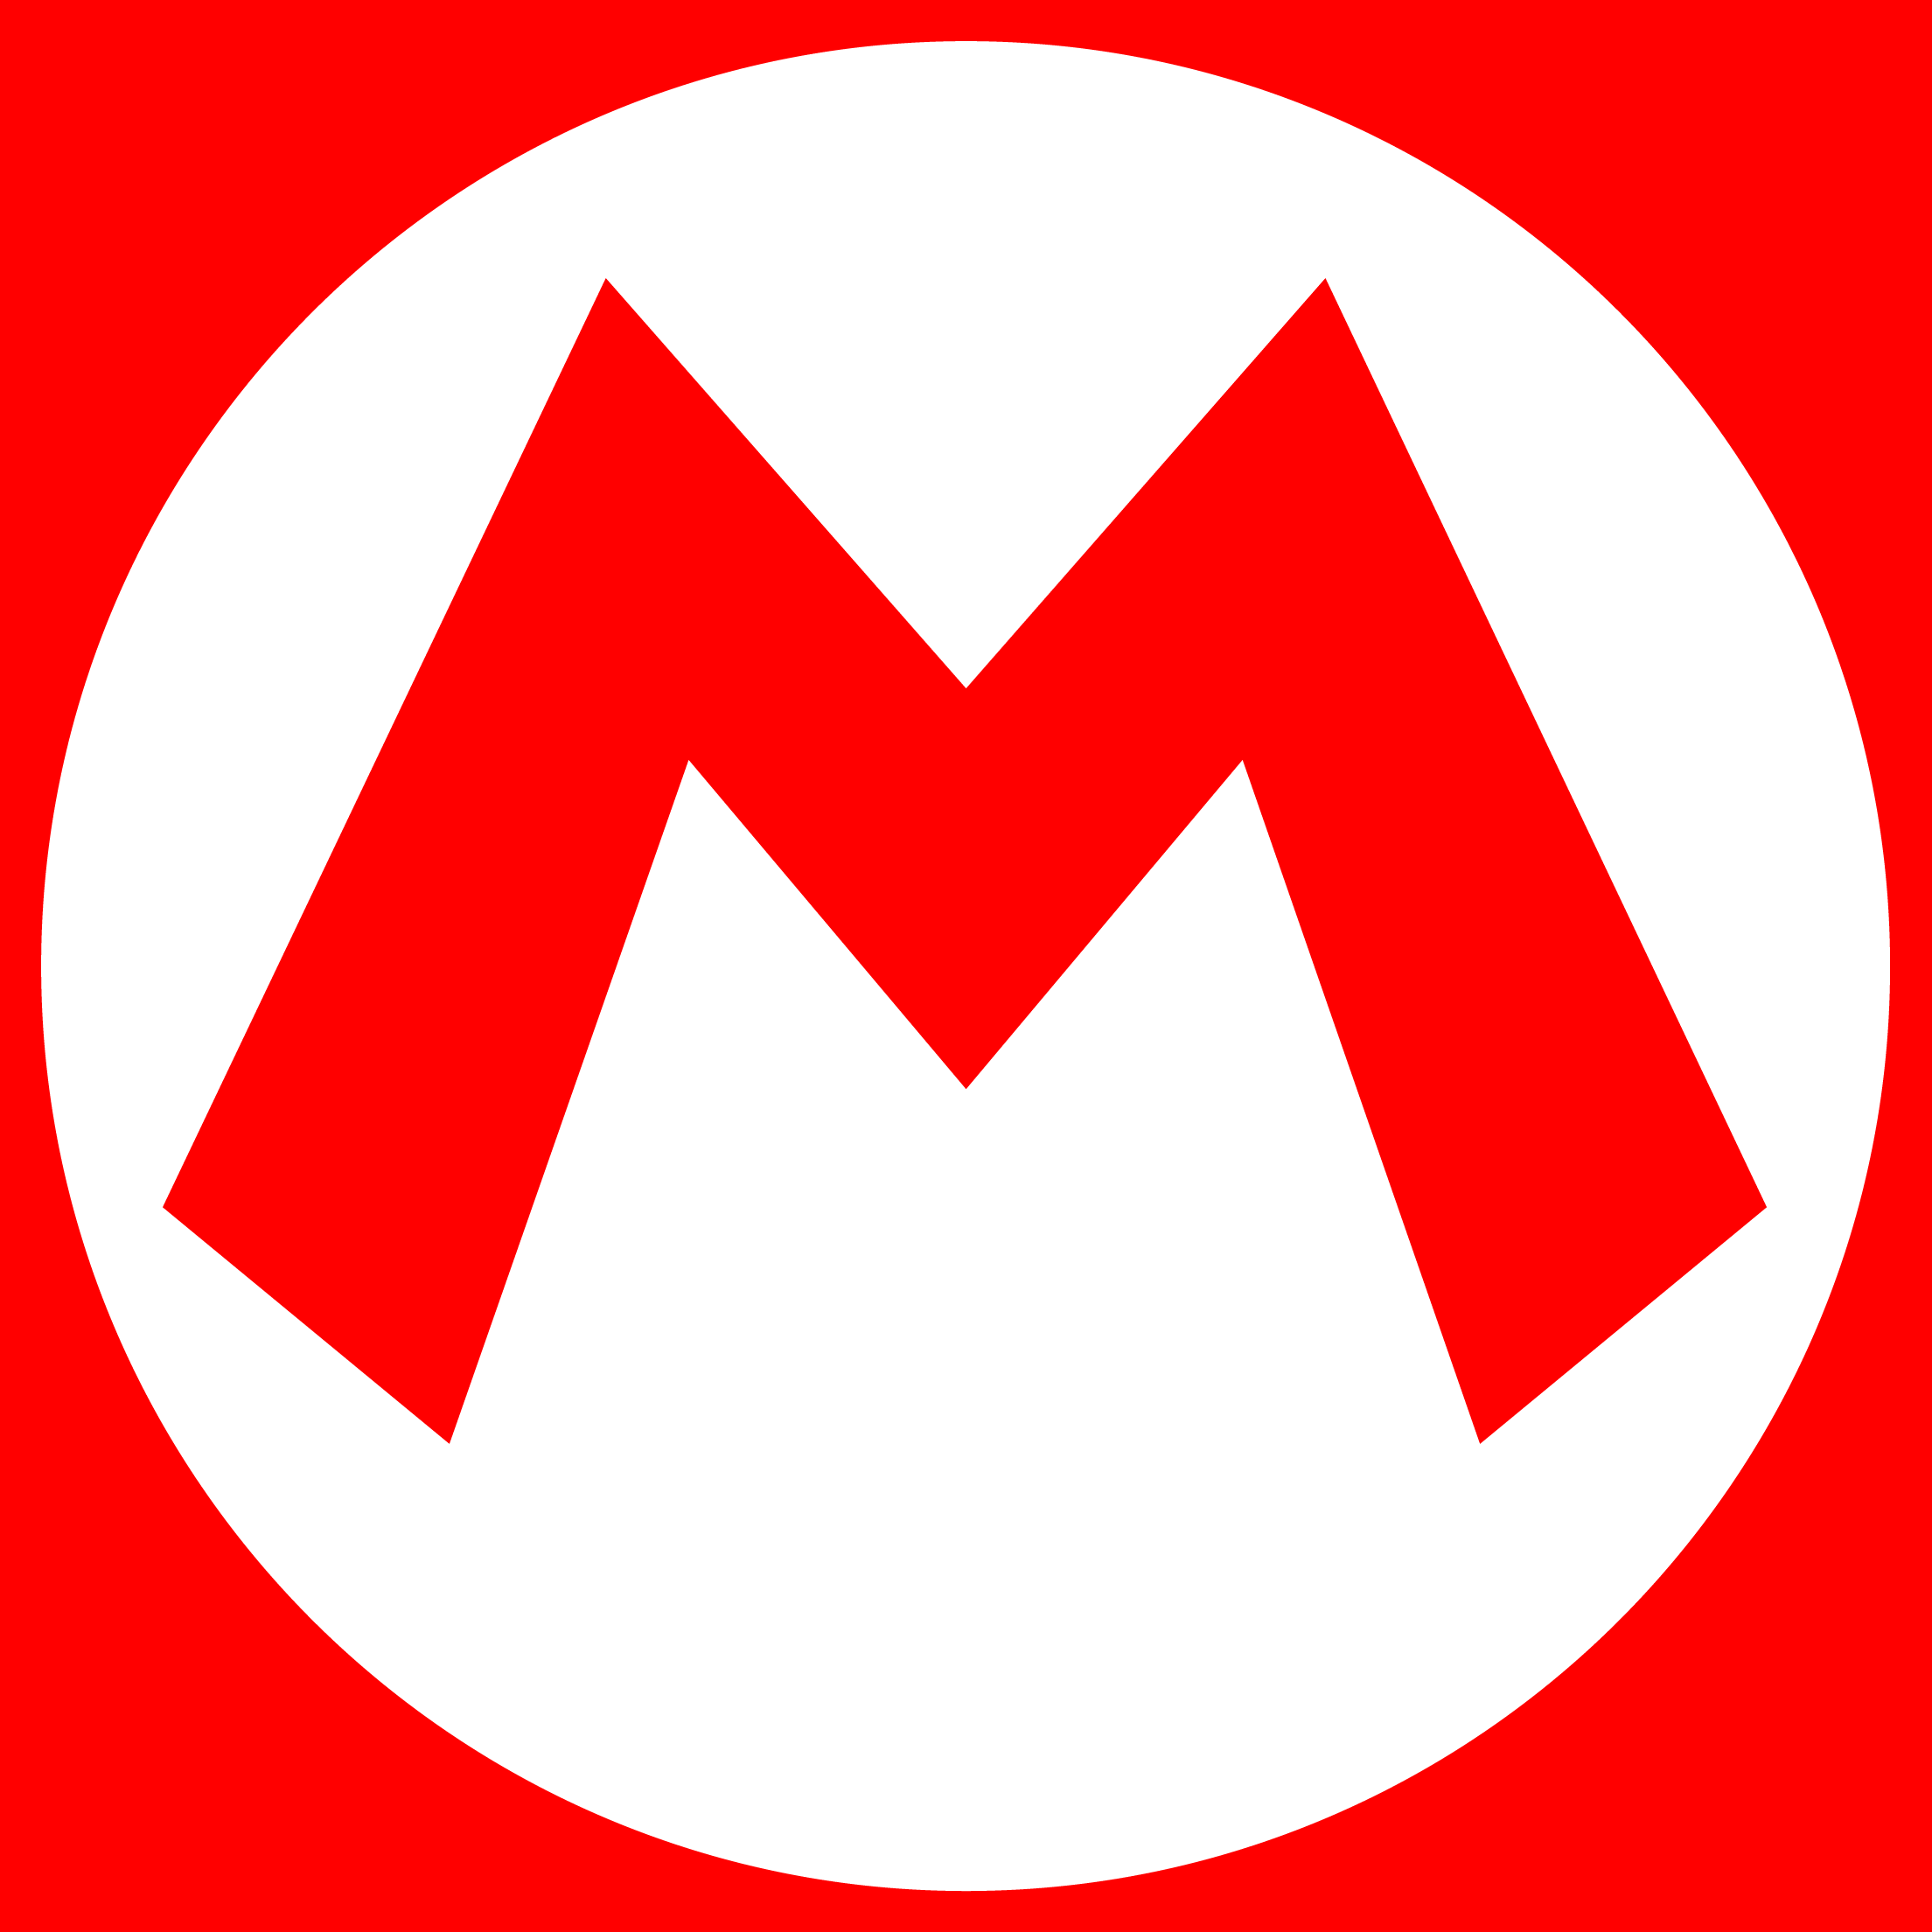 Super Mario Logo: A Nostalgic Symbol of Gaming Culture